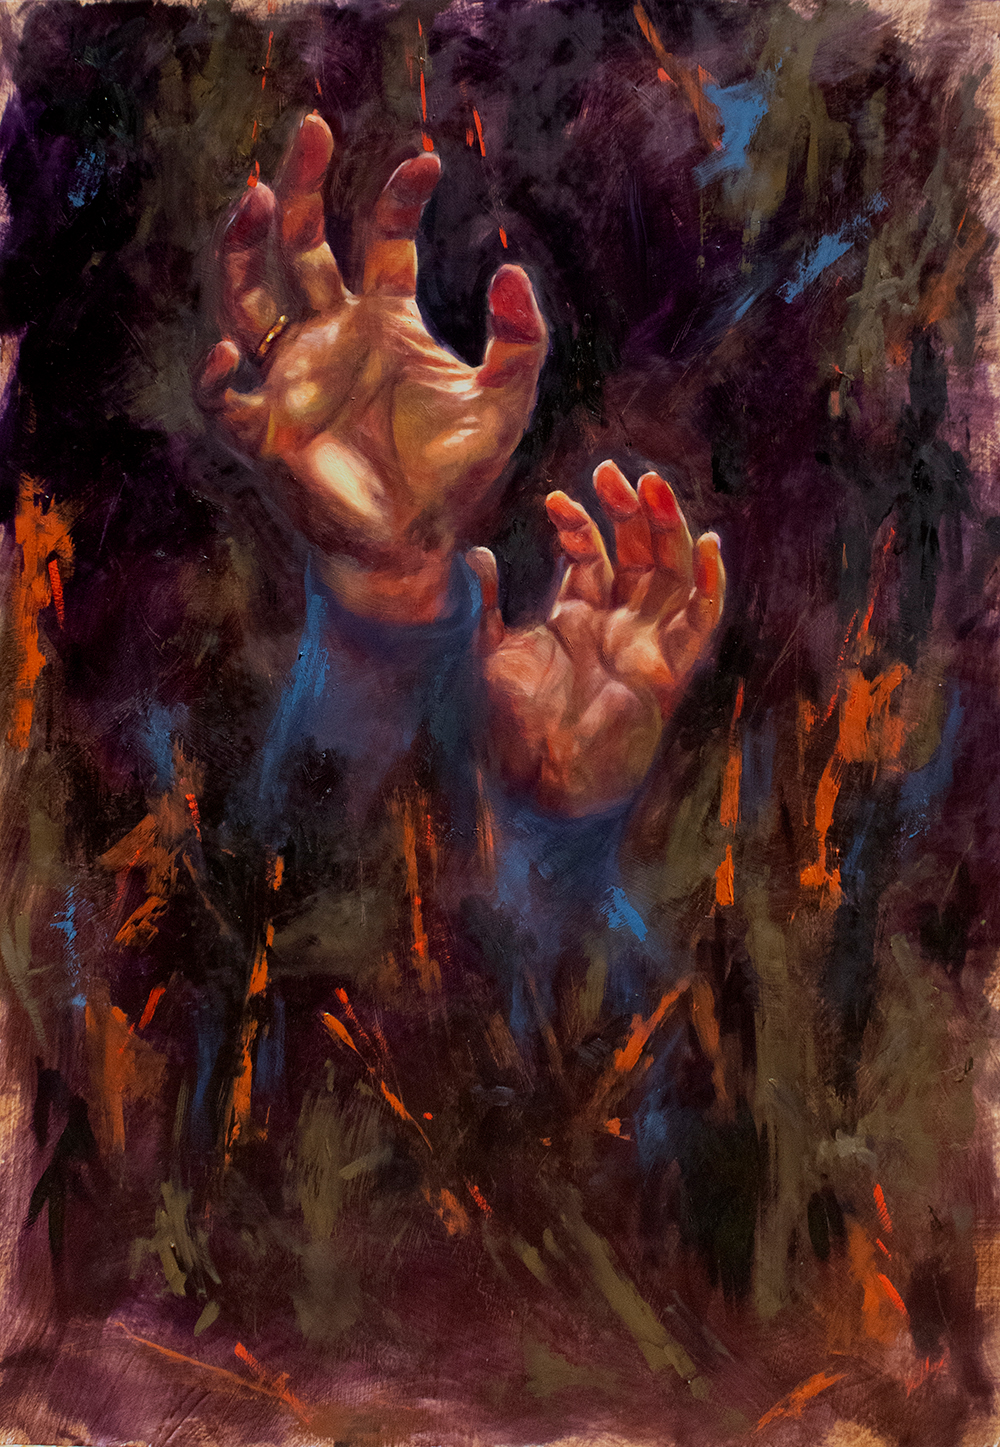 Hands reach out from a dark void scratching away the anxieties of a broken world. A self-portrait. 